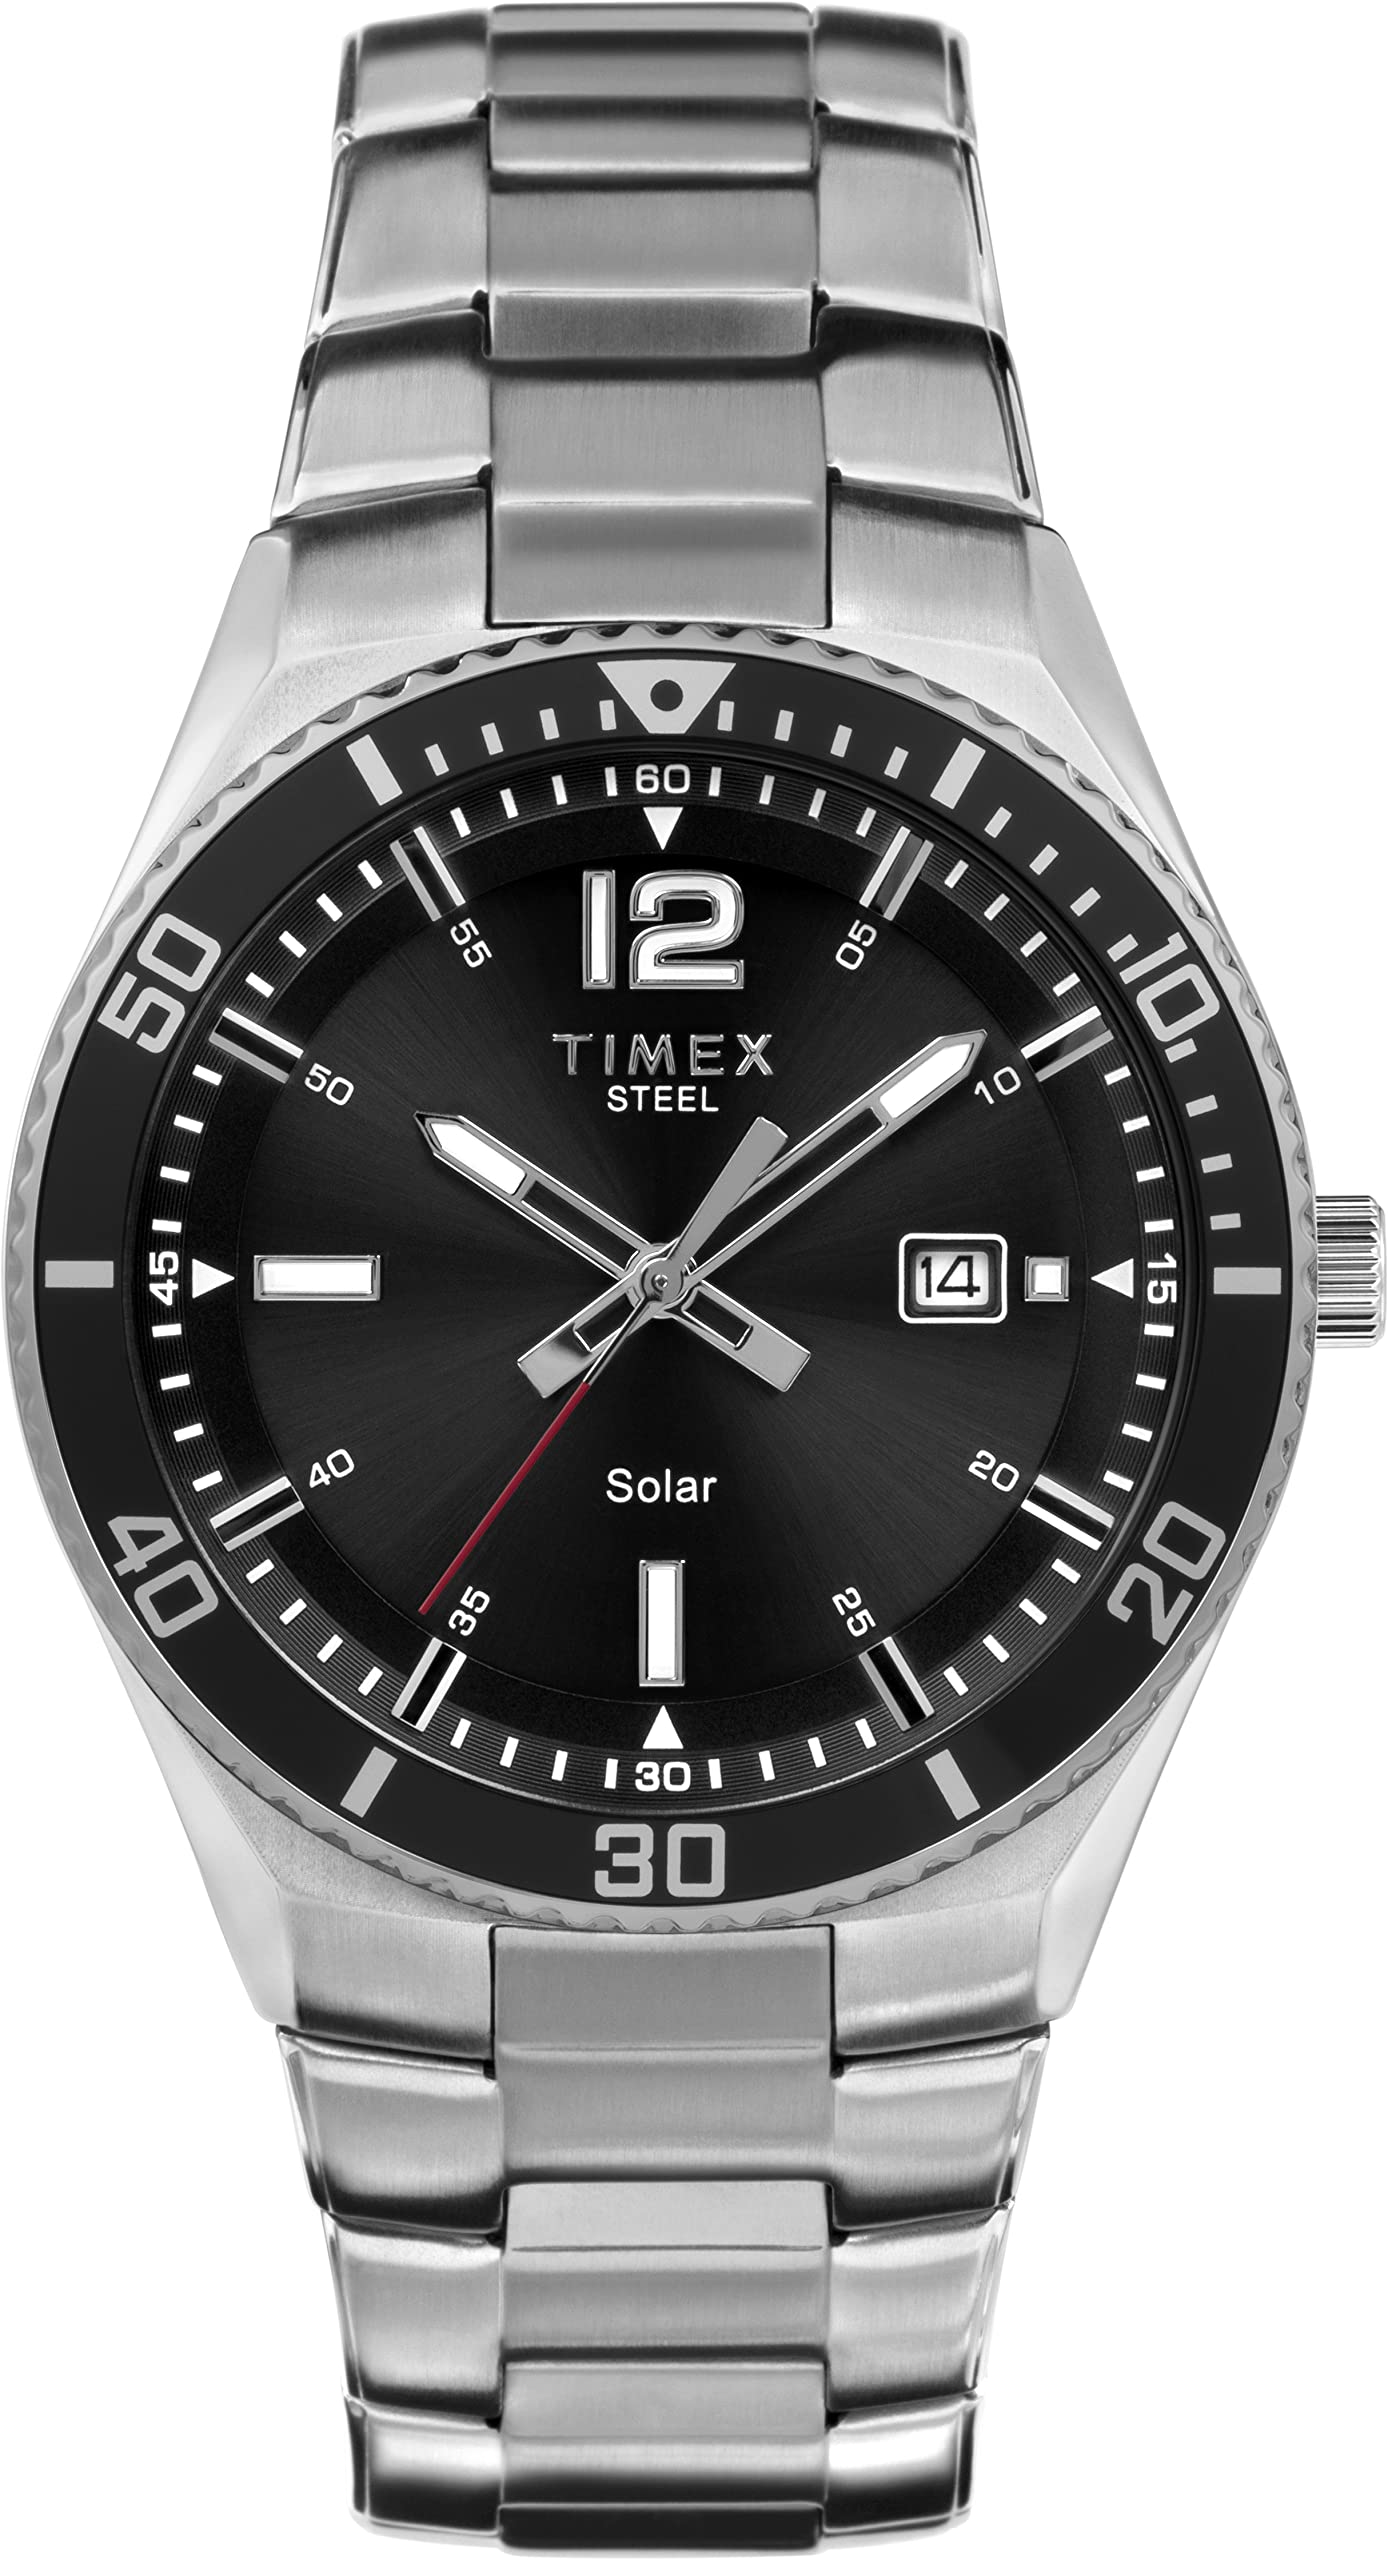 Timex Men's Solar Premium Dress 43mm Watch - Two-Tone Case Two-Tone Bracelet Blue Dial